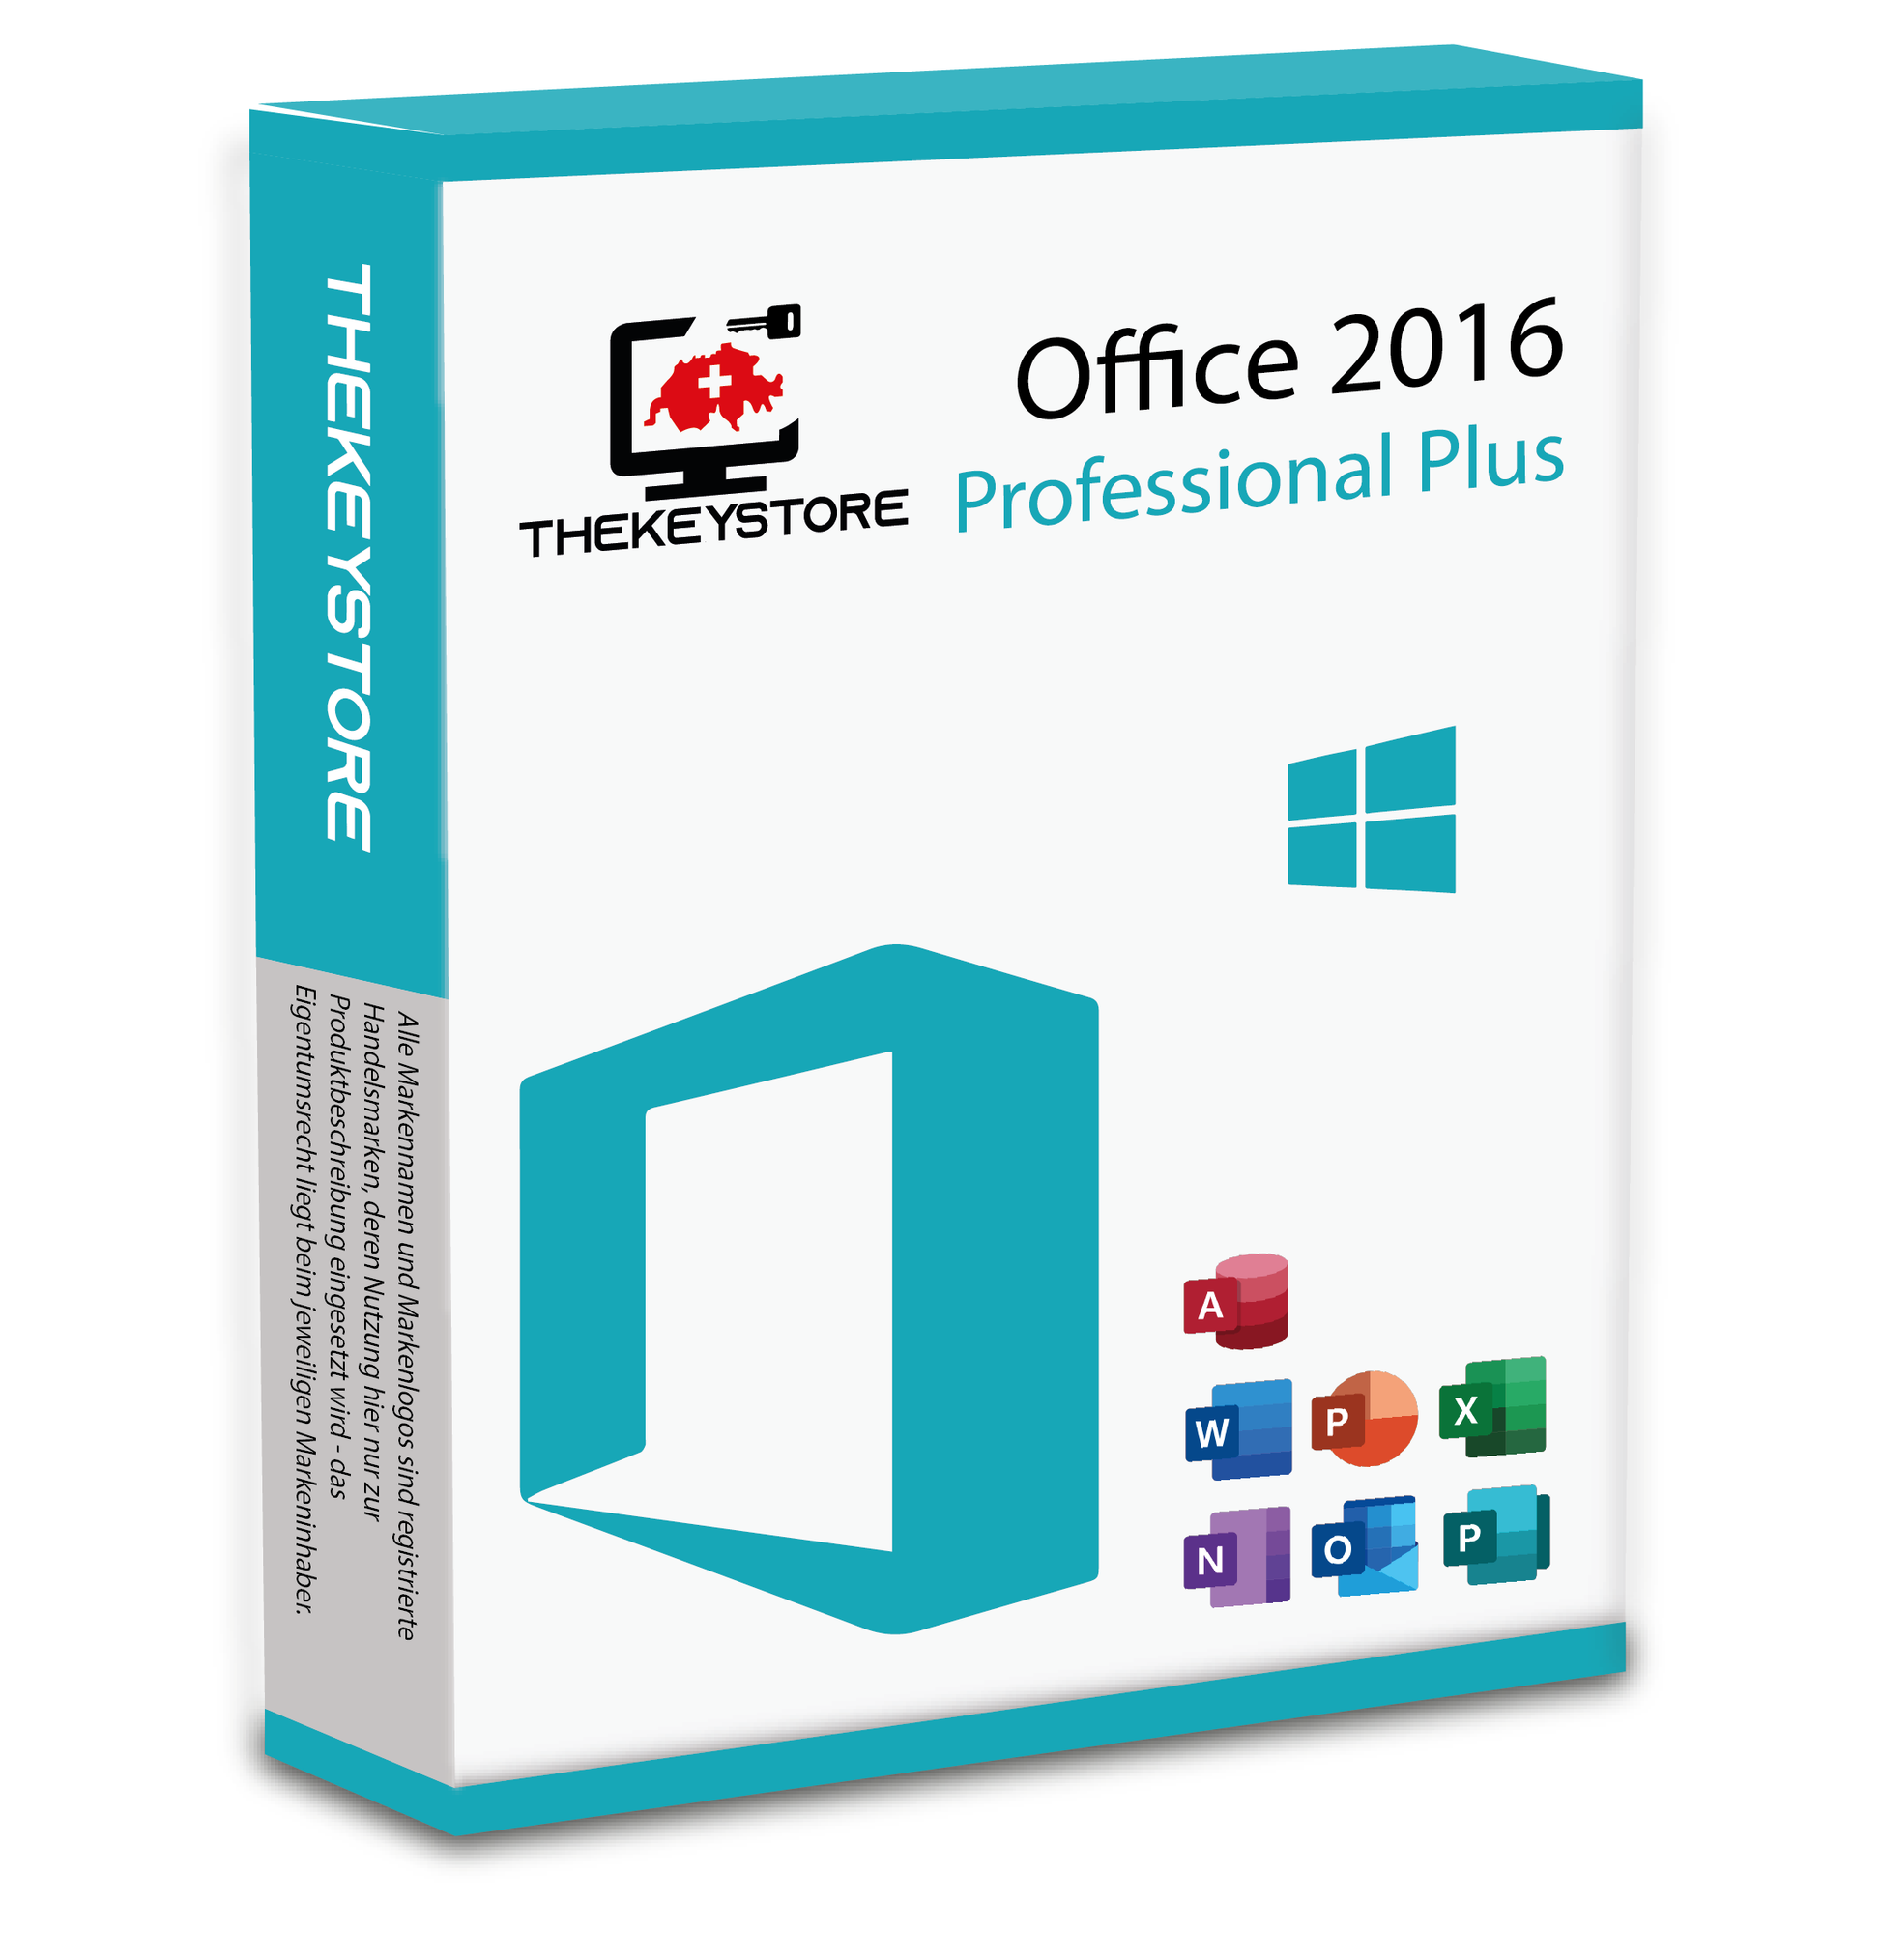 Microsoft Office 2016 Professional Plus - TheKeyStore Schweiz